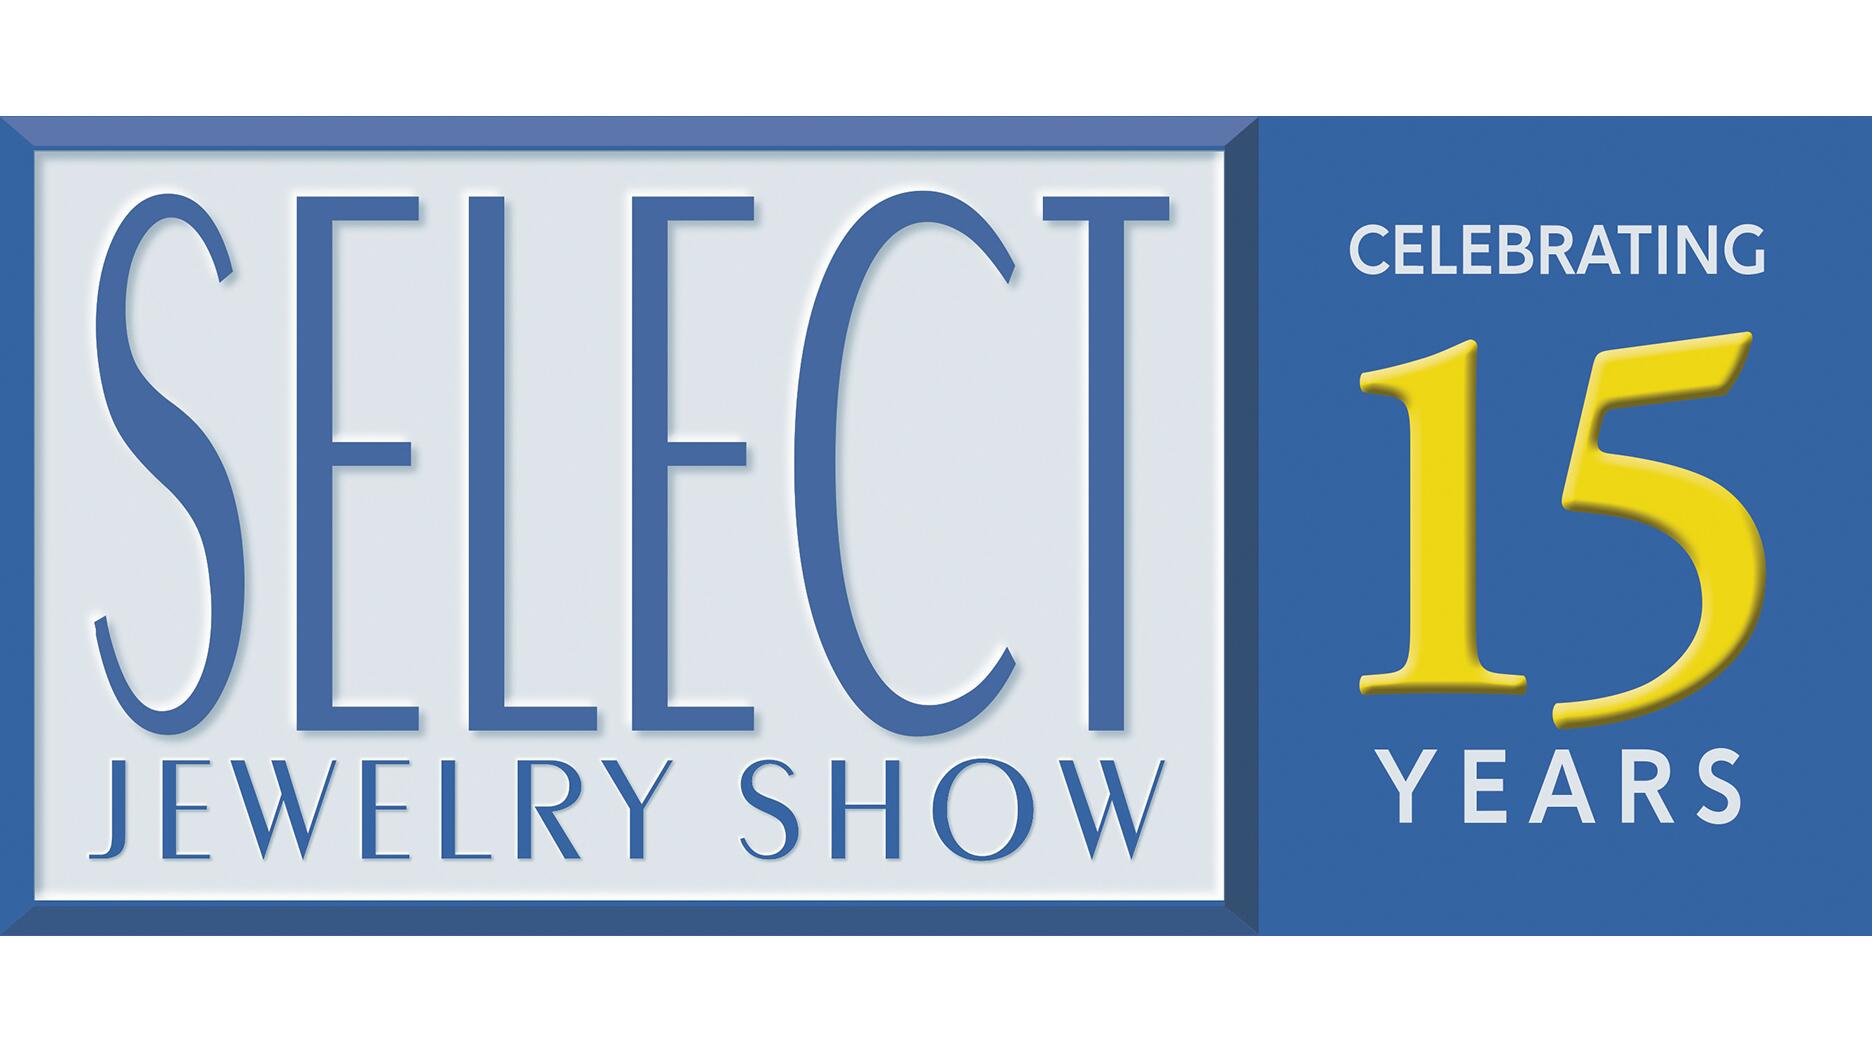 Select Jewelry Show logo